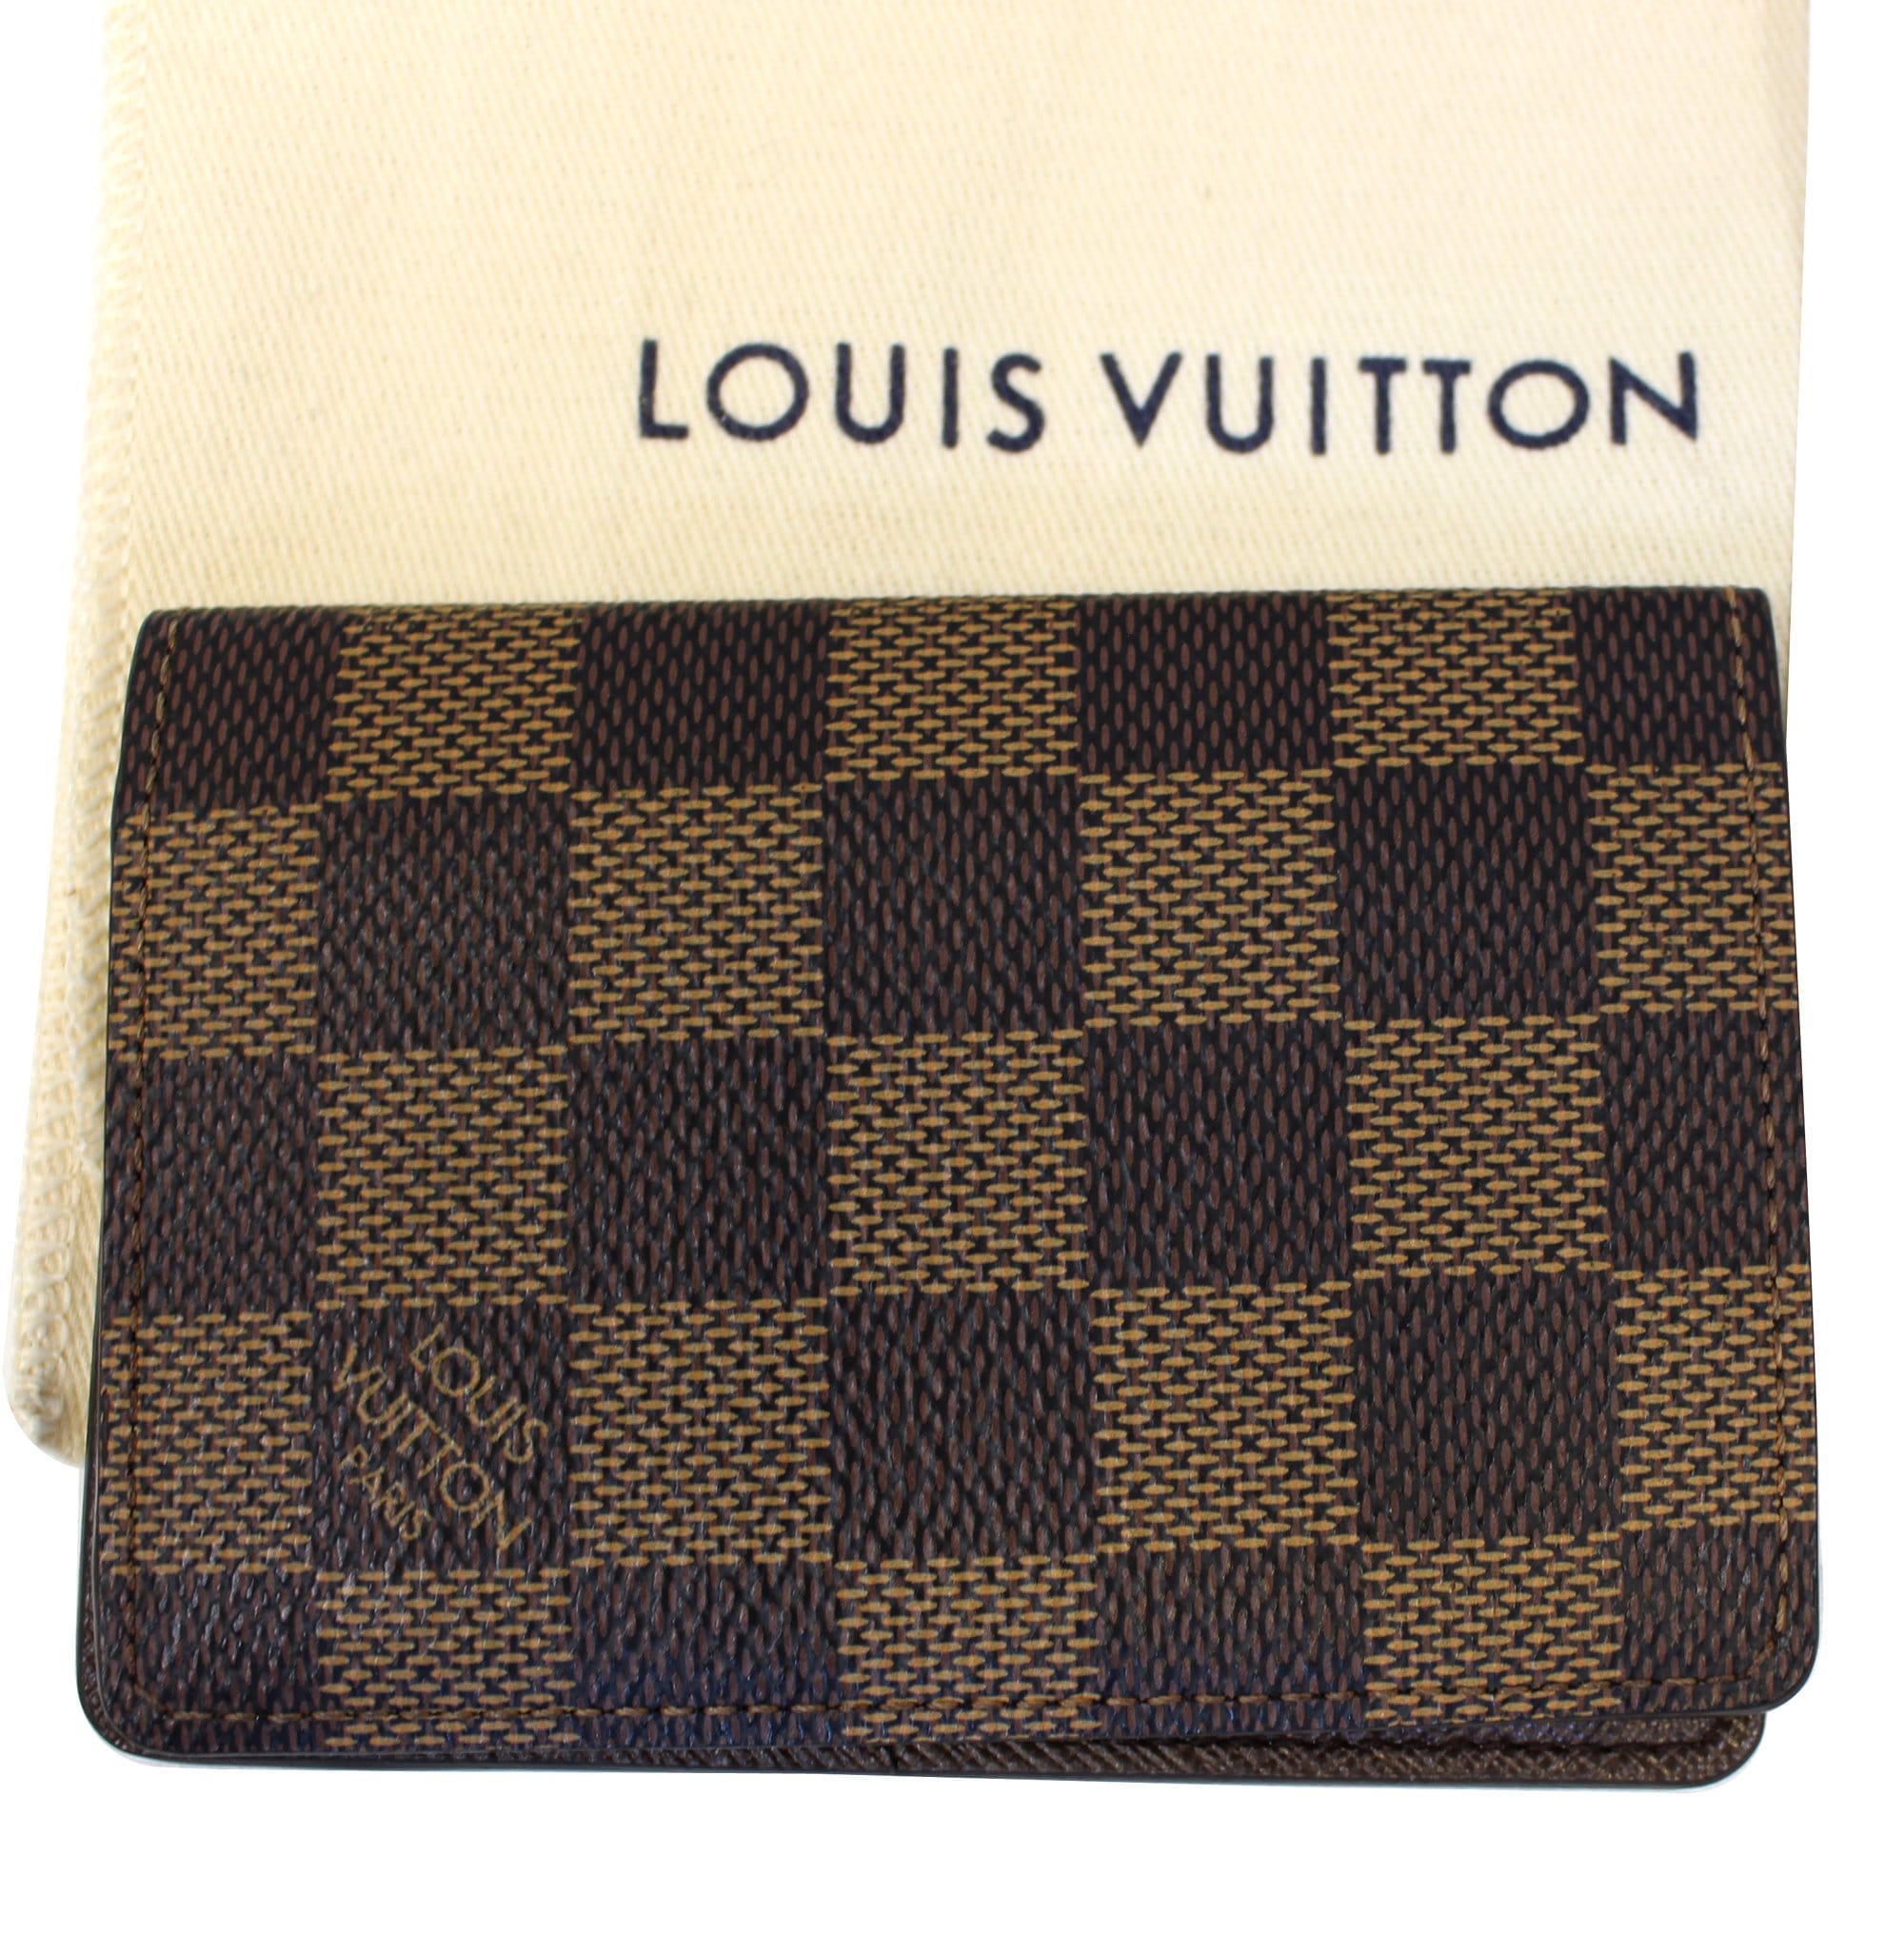 Louis Vuitton pocket organizer damier ebene MI0034